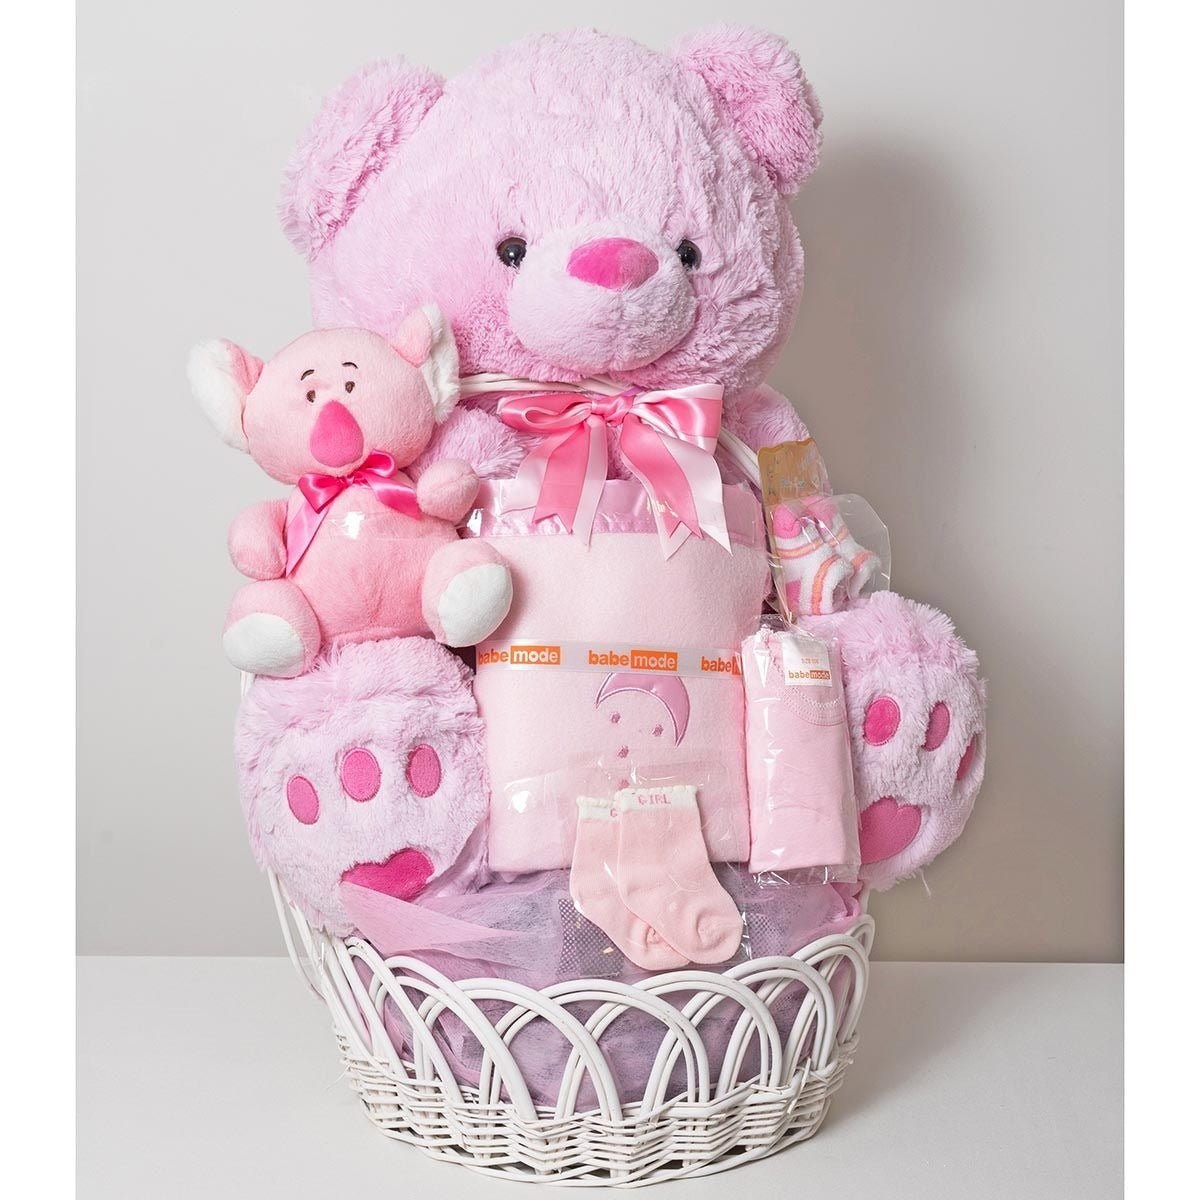 Teddy Baby Product Hamper Pink Deluxe